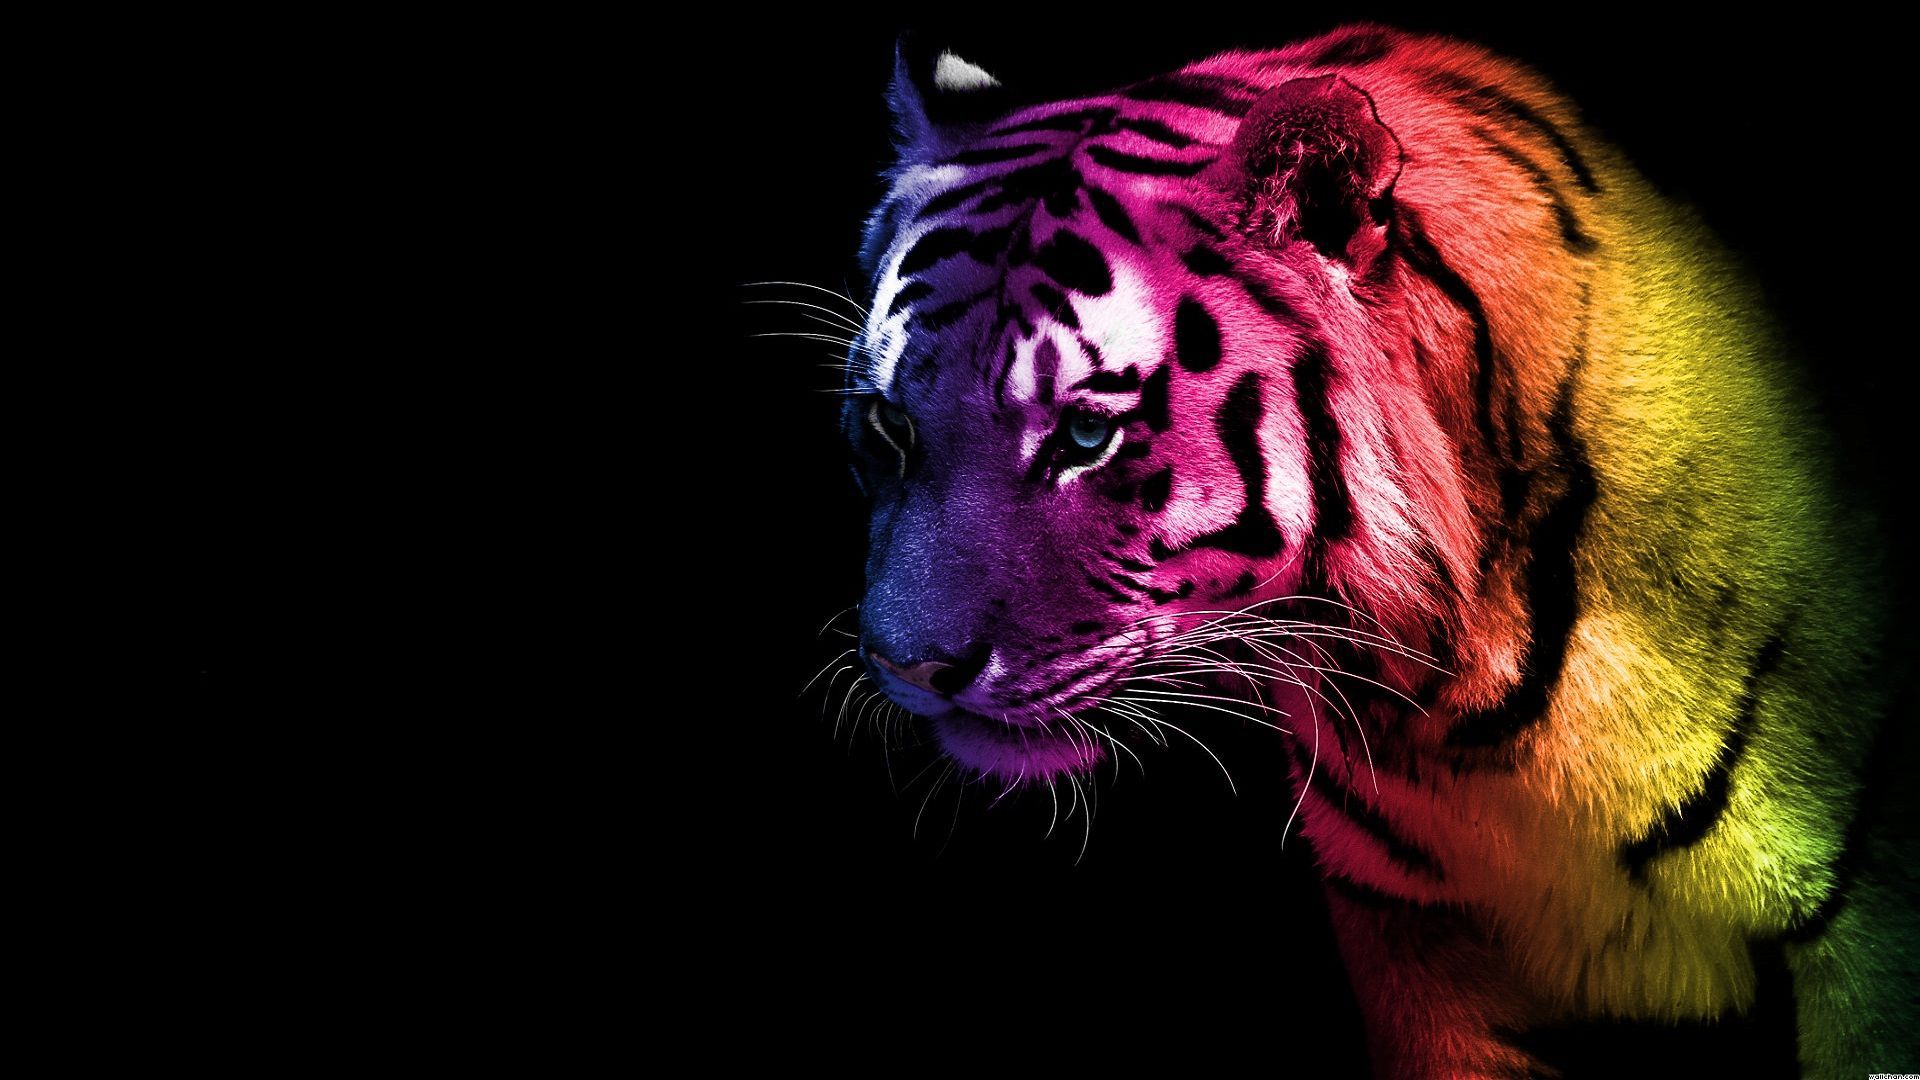 Colorful Tiger. Tiger wallpaper, Tiger picture, Pet tiger